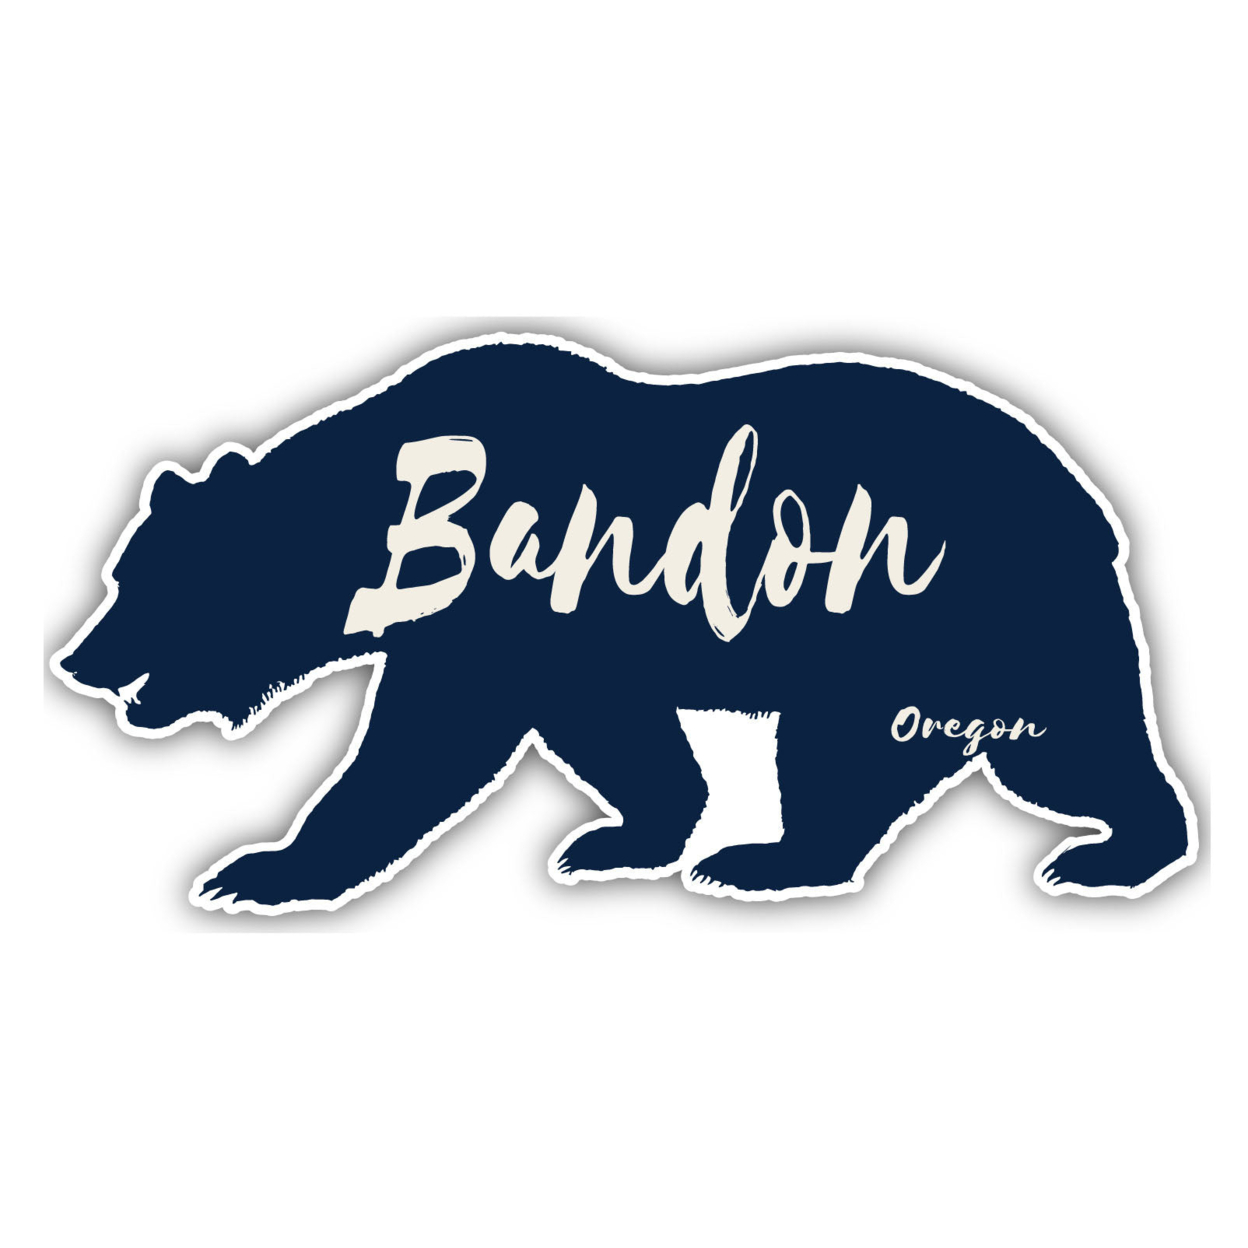 Bandon Oregon Souvenir Decorative Stickers (Choose Theme And Size) - 4-Pack, 6-Inch, Camp Life